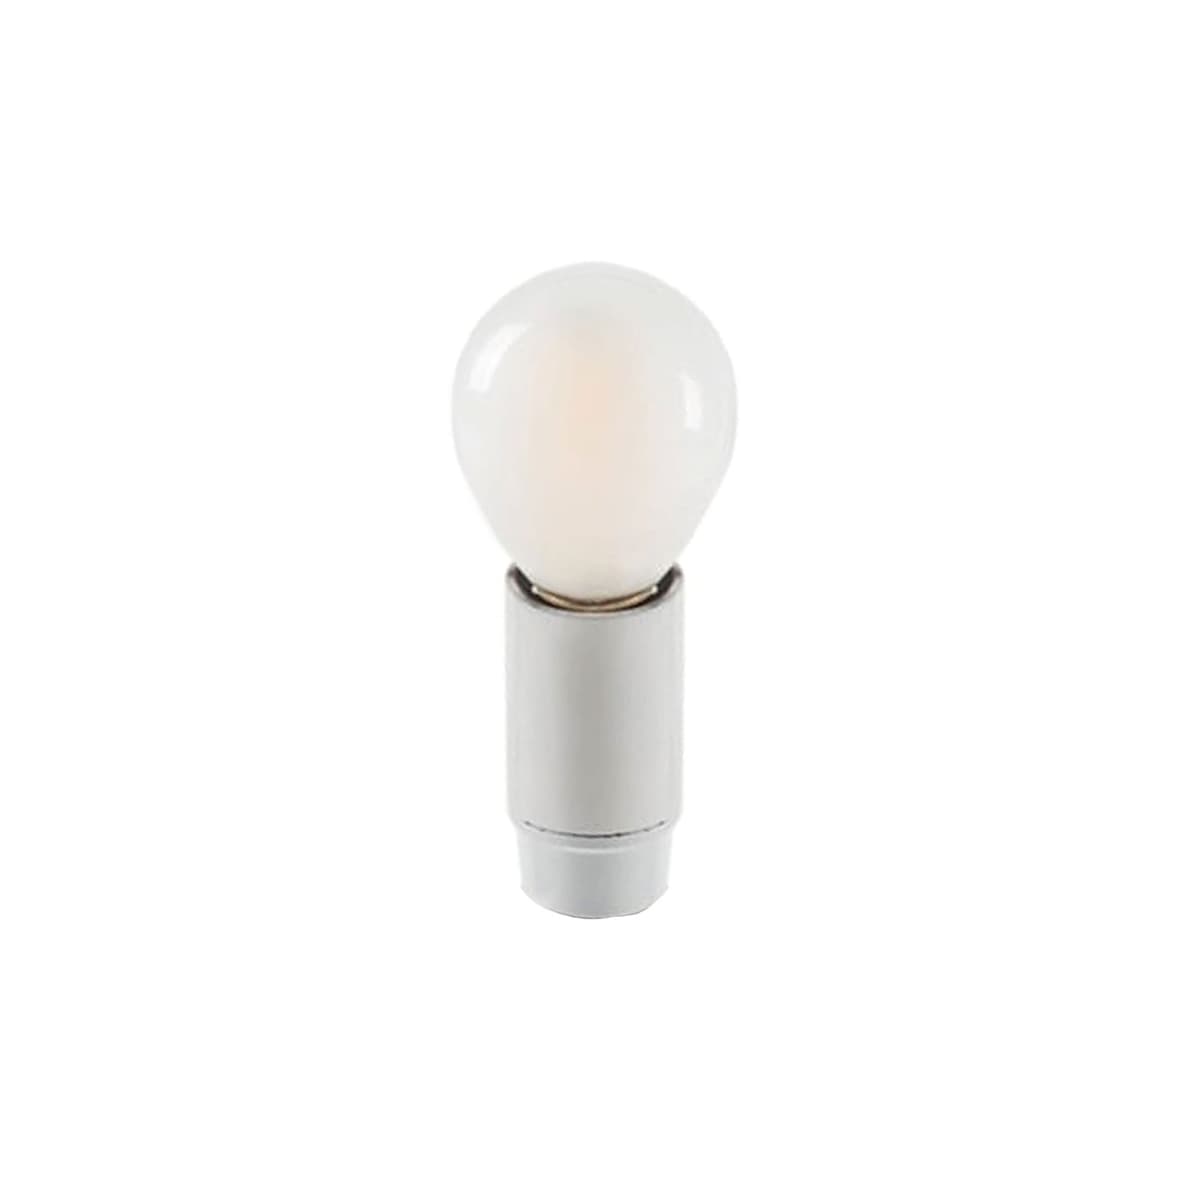 LED Bulb Monkey Lamp - Indoor